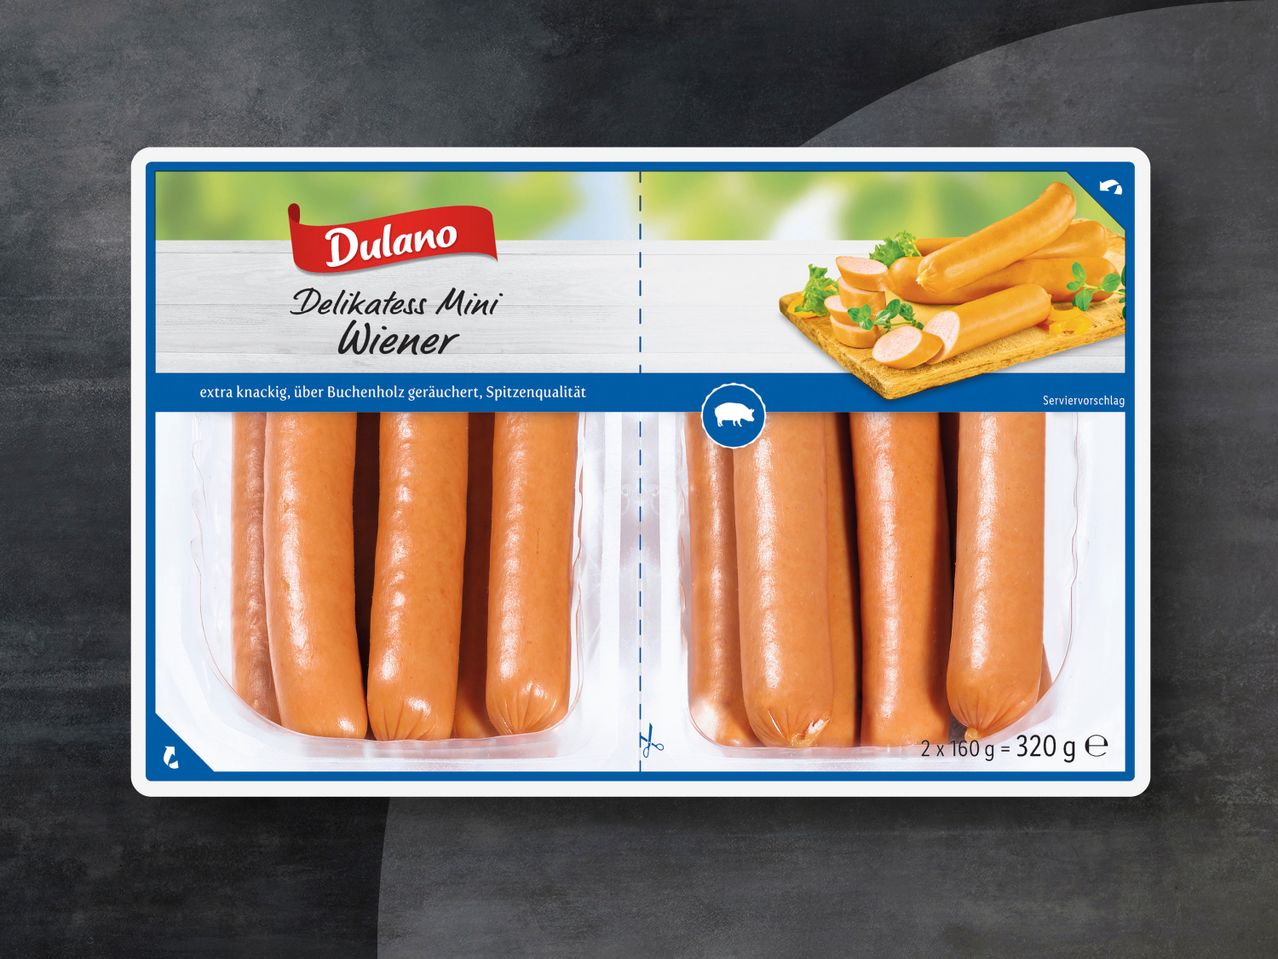 Dulano Mini-Wiener